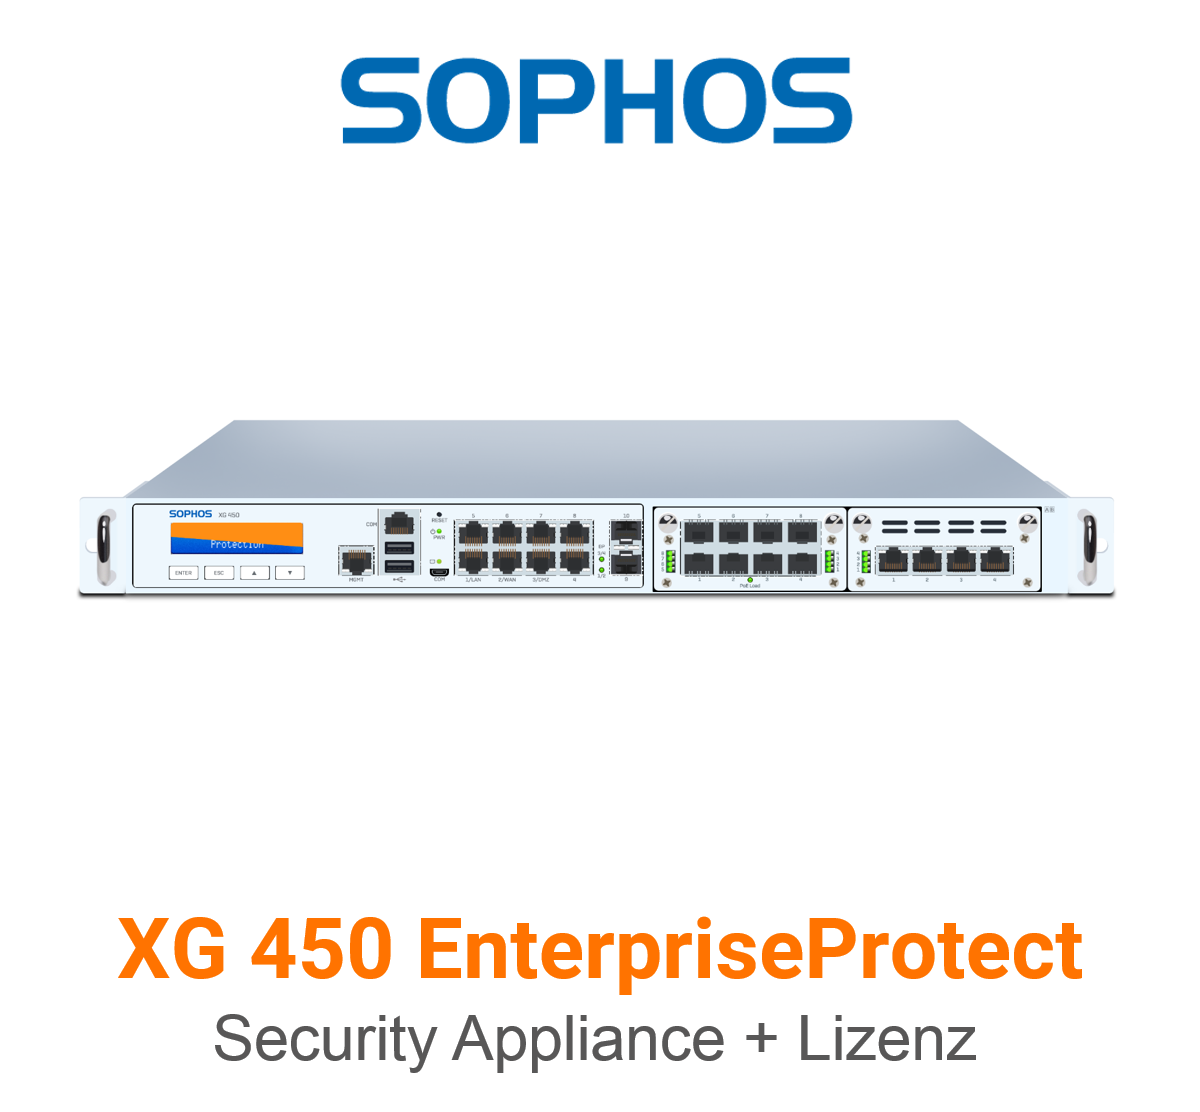 Sophos XG 450 EnterpriseProtect Bundle (Hardware + Lizenz)